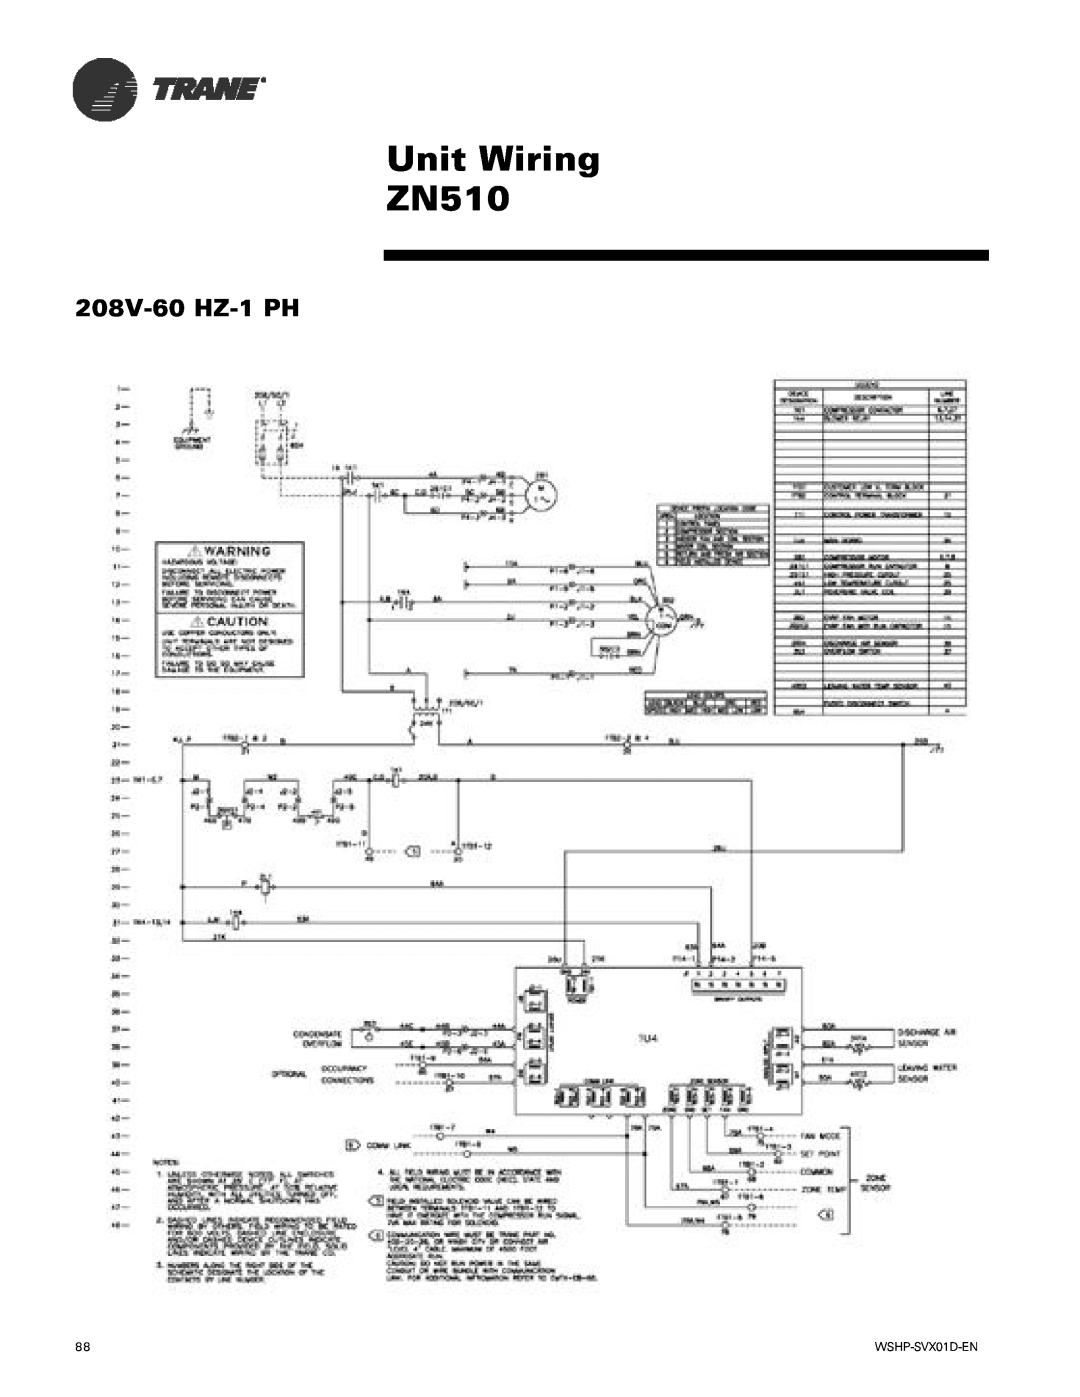 Trane GEH, GEV manual Unit Wiring ZN510, 208V-60 HZ-1PH 